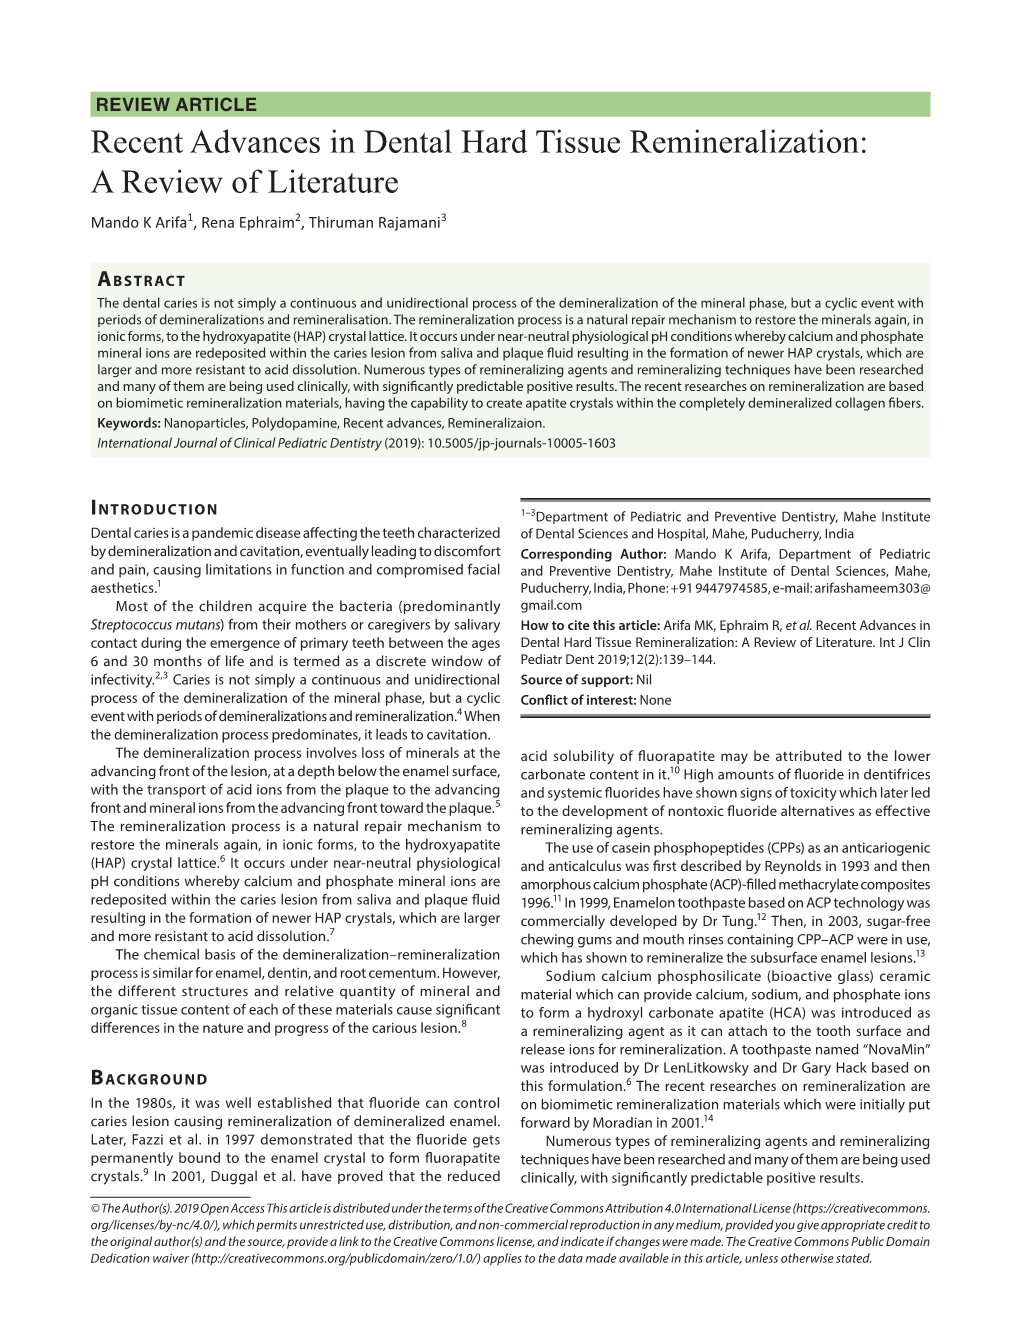 Recent Advances in Dental Hard Tissue Remineralization: a Review of Literature Mando K Arifa1, Rena Ephraim2, Thiruman Rajamani3